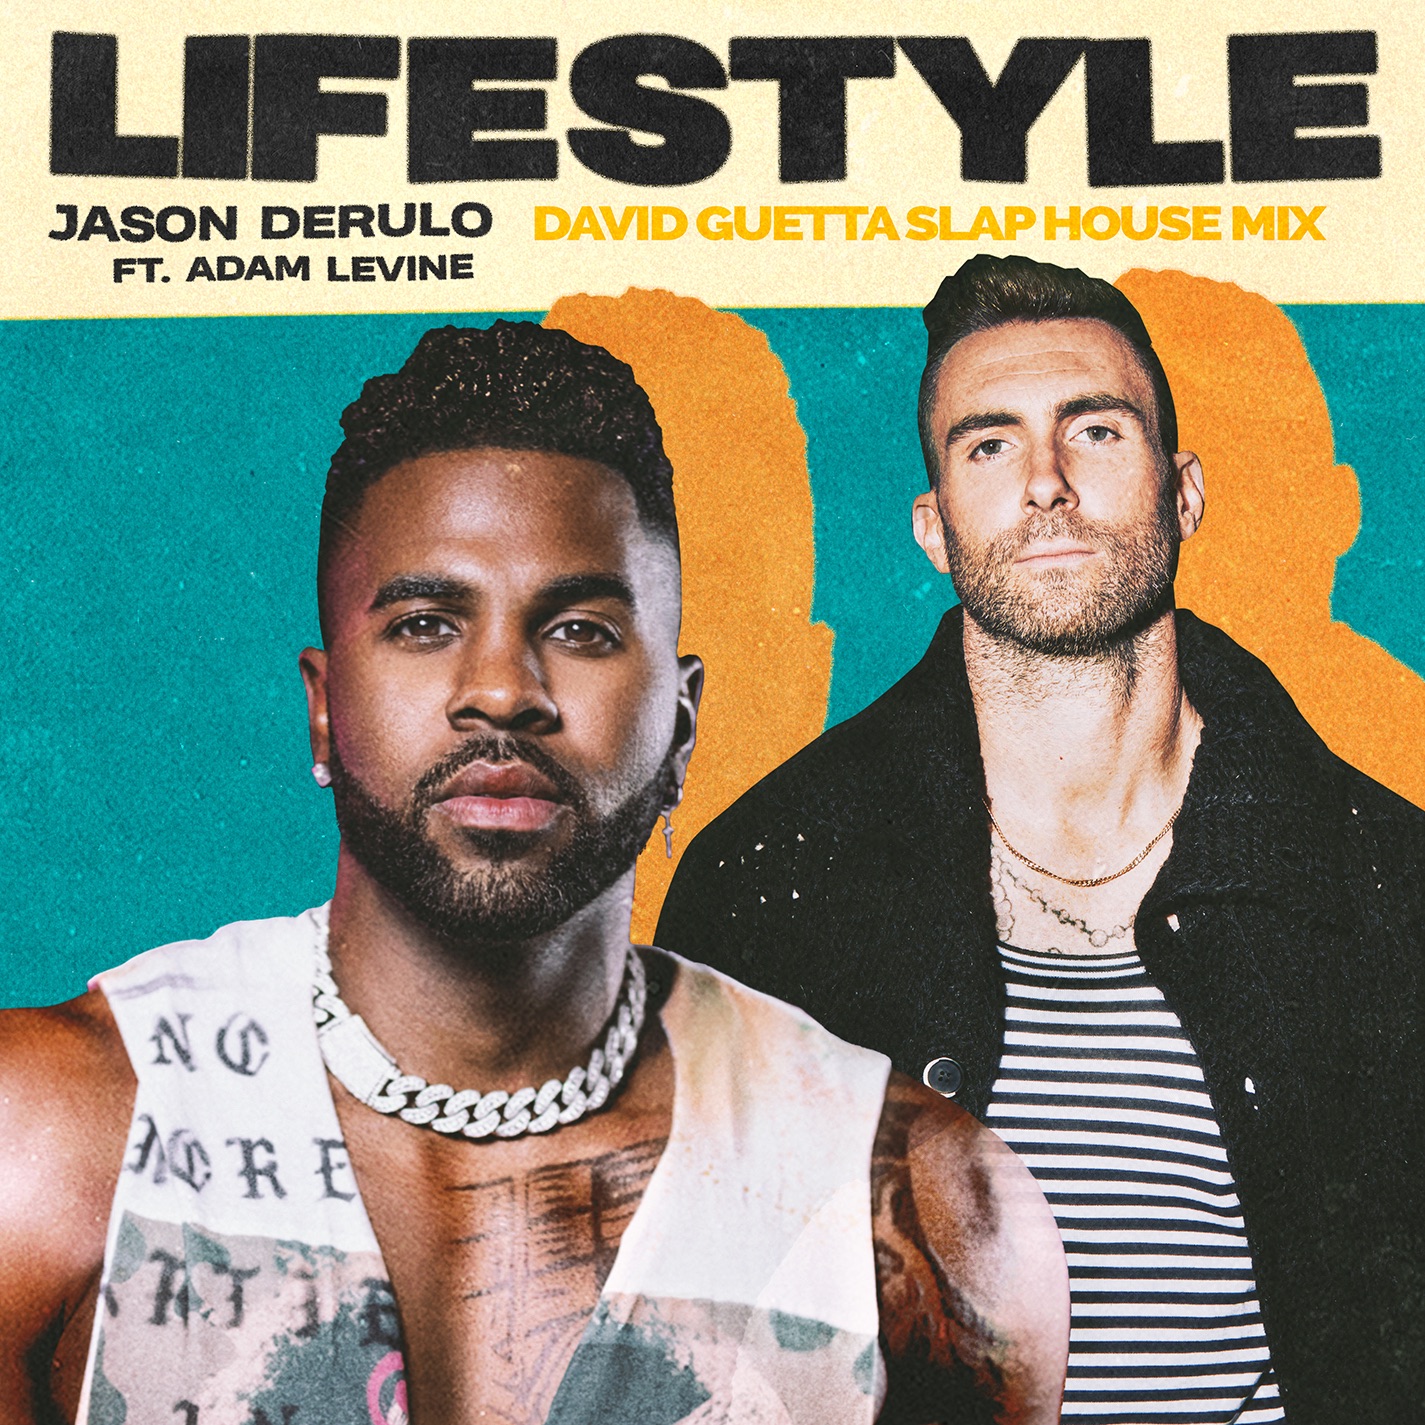 Jason Derulo - Lifestyle (feat. Adam Levine) [David Guetta Slap House Mix] - Single